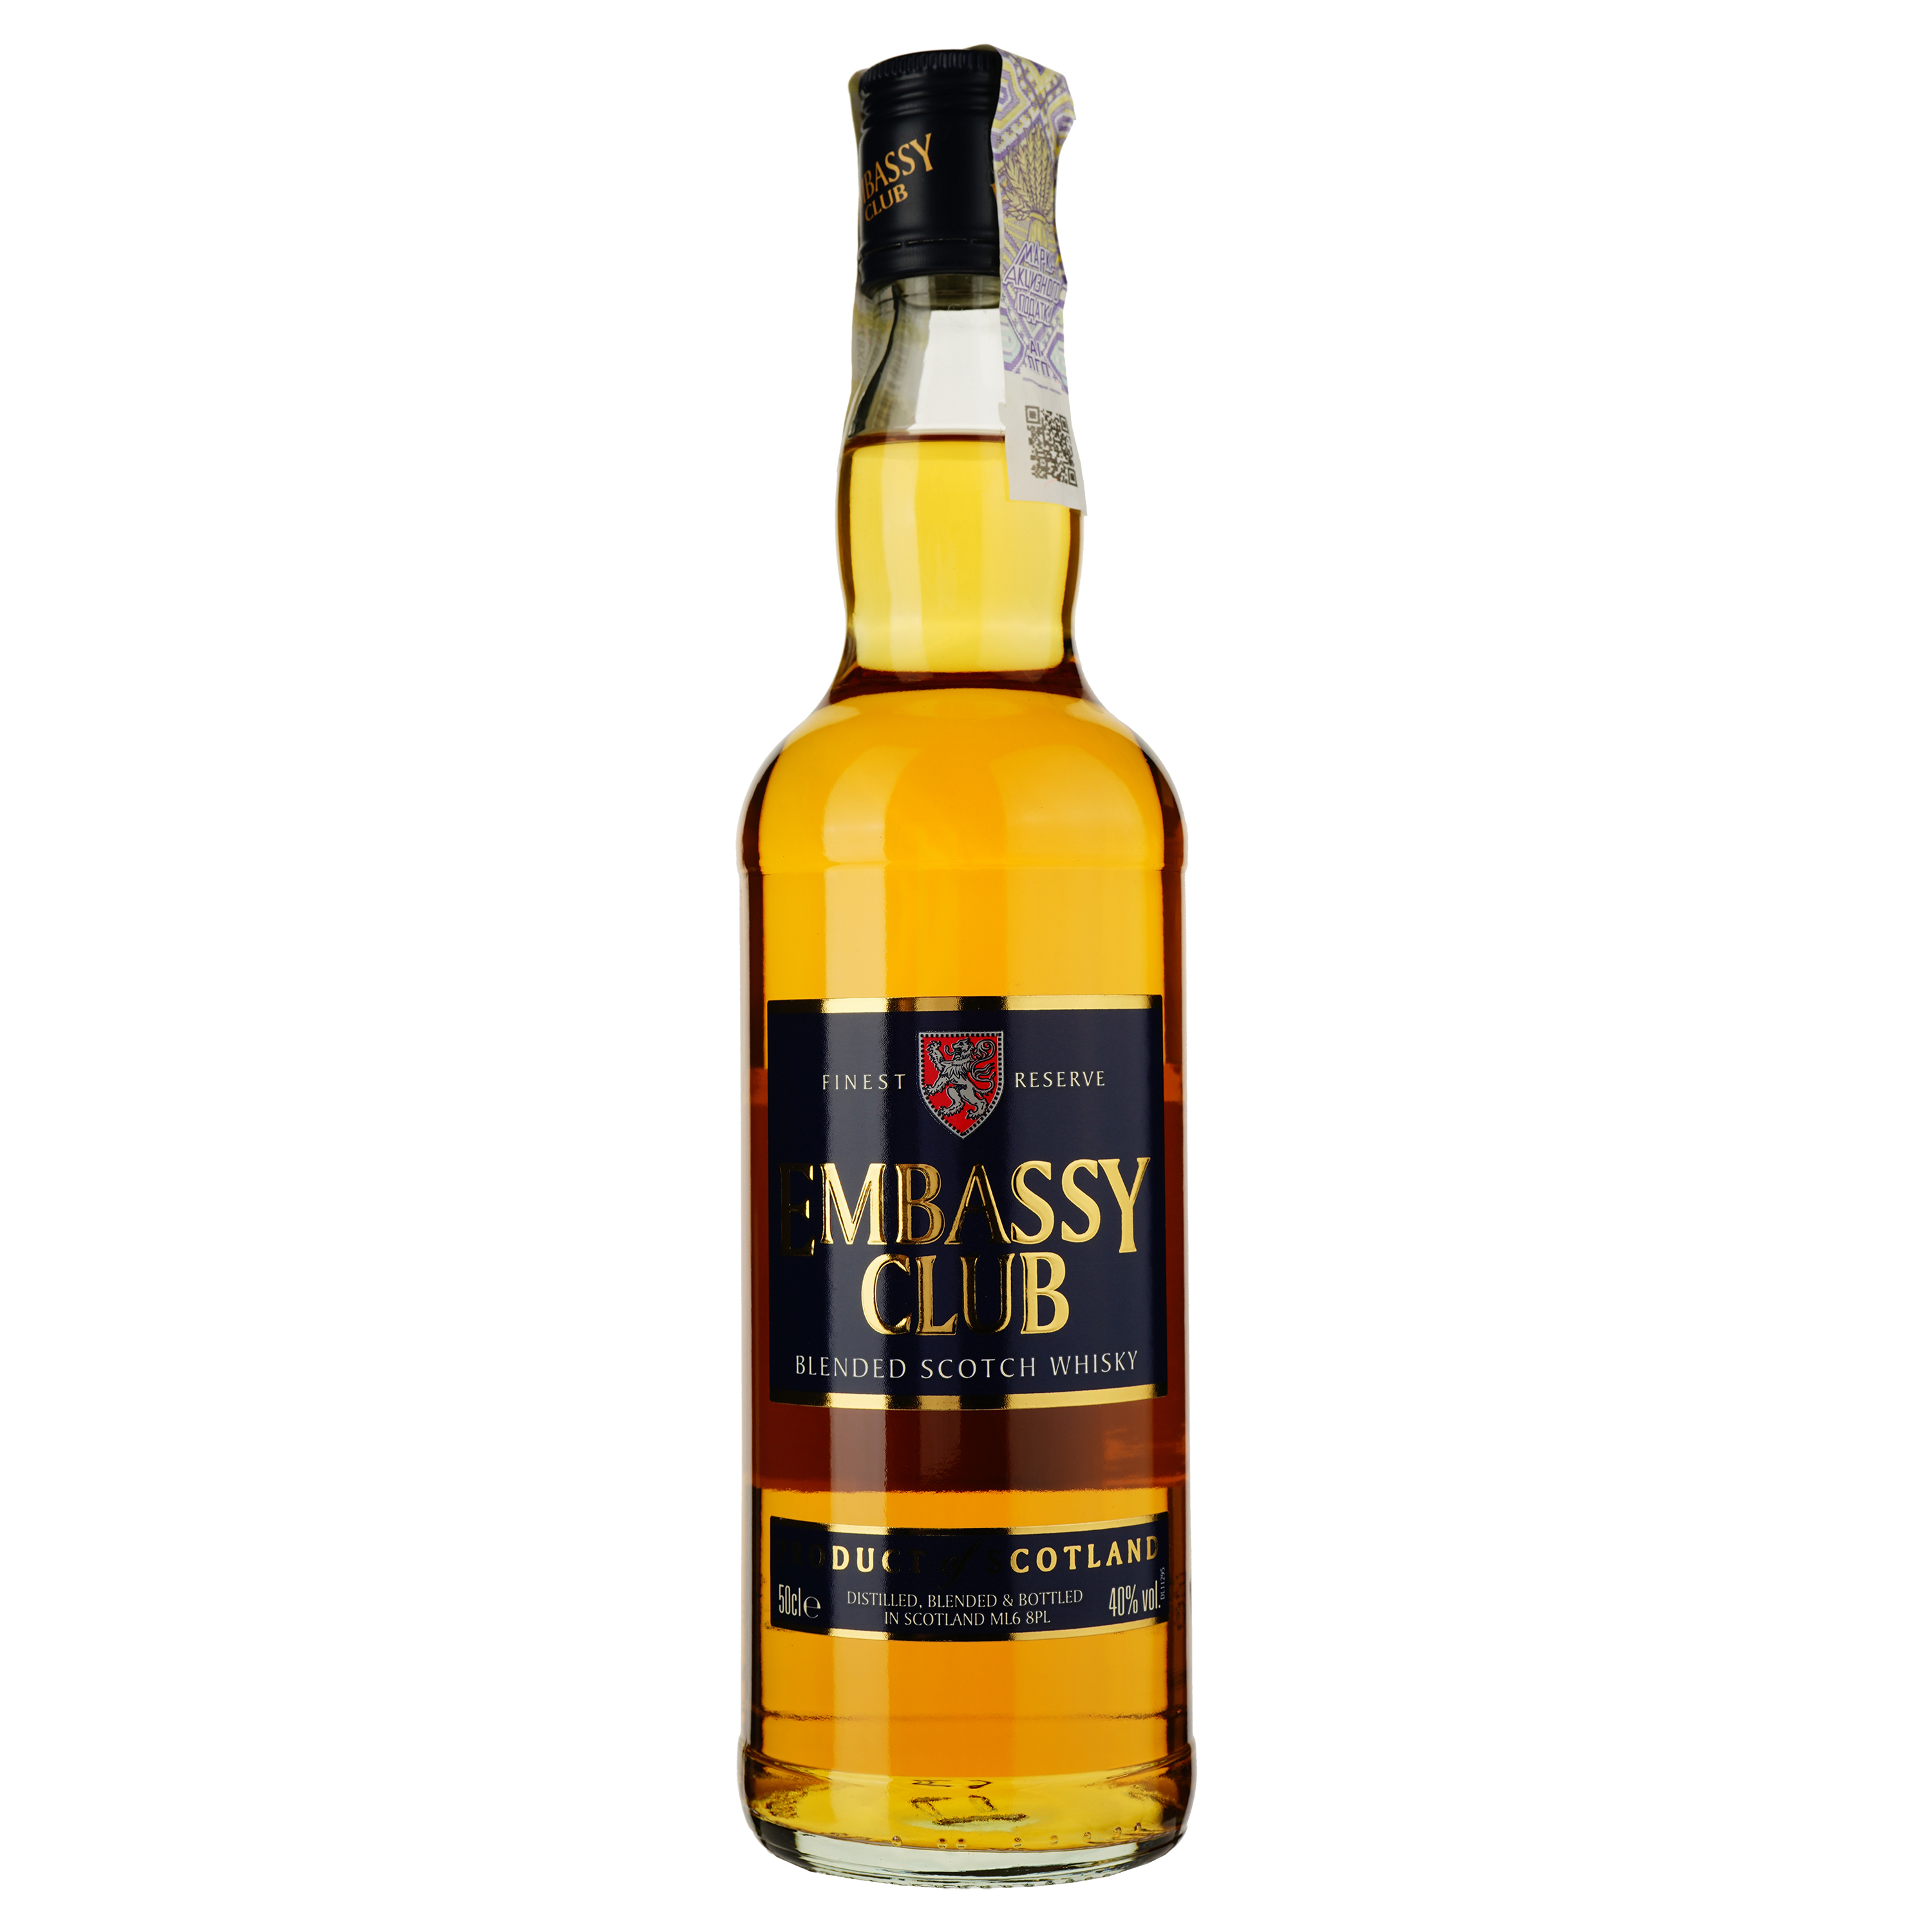 Виски Embassy Club 3 yo Blended Scotch Whisky, 40%, 0,5 л - фото 1